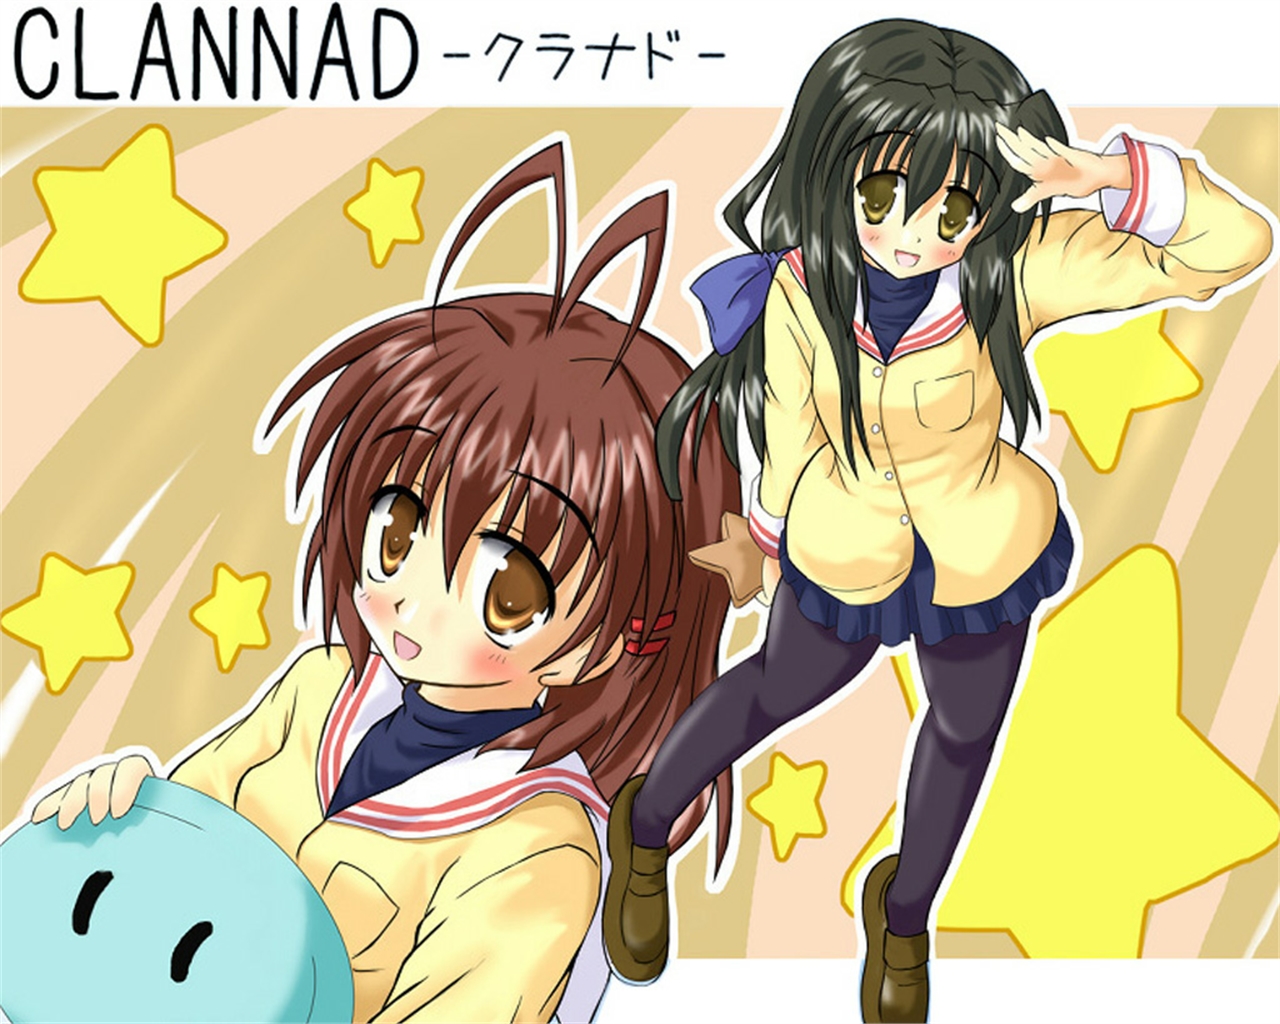 Descarga gratis la imagen Animado, Clannad, Nagisa Furukawa, Fuuko Ibuki en el escritorio de tu PC